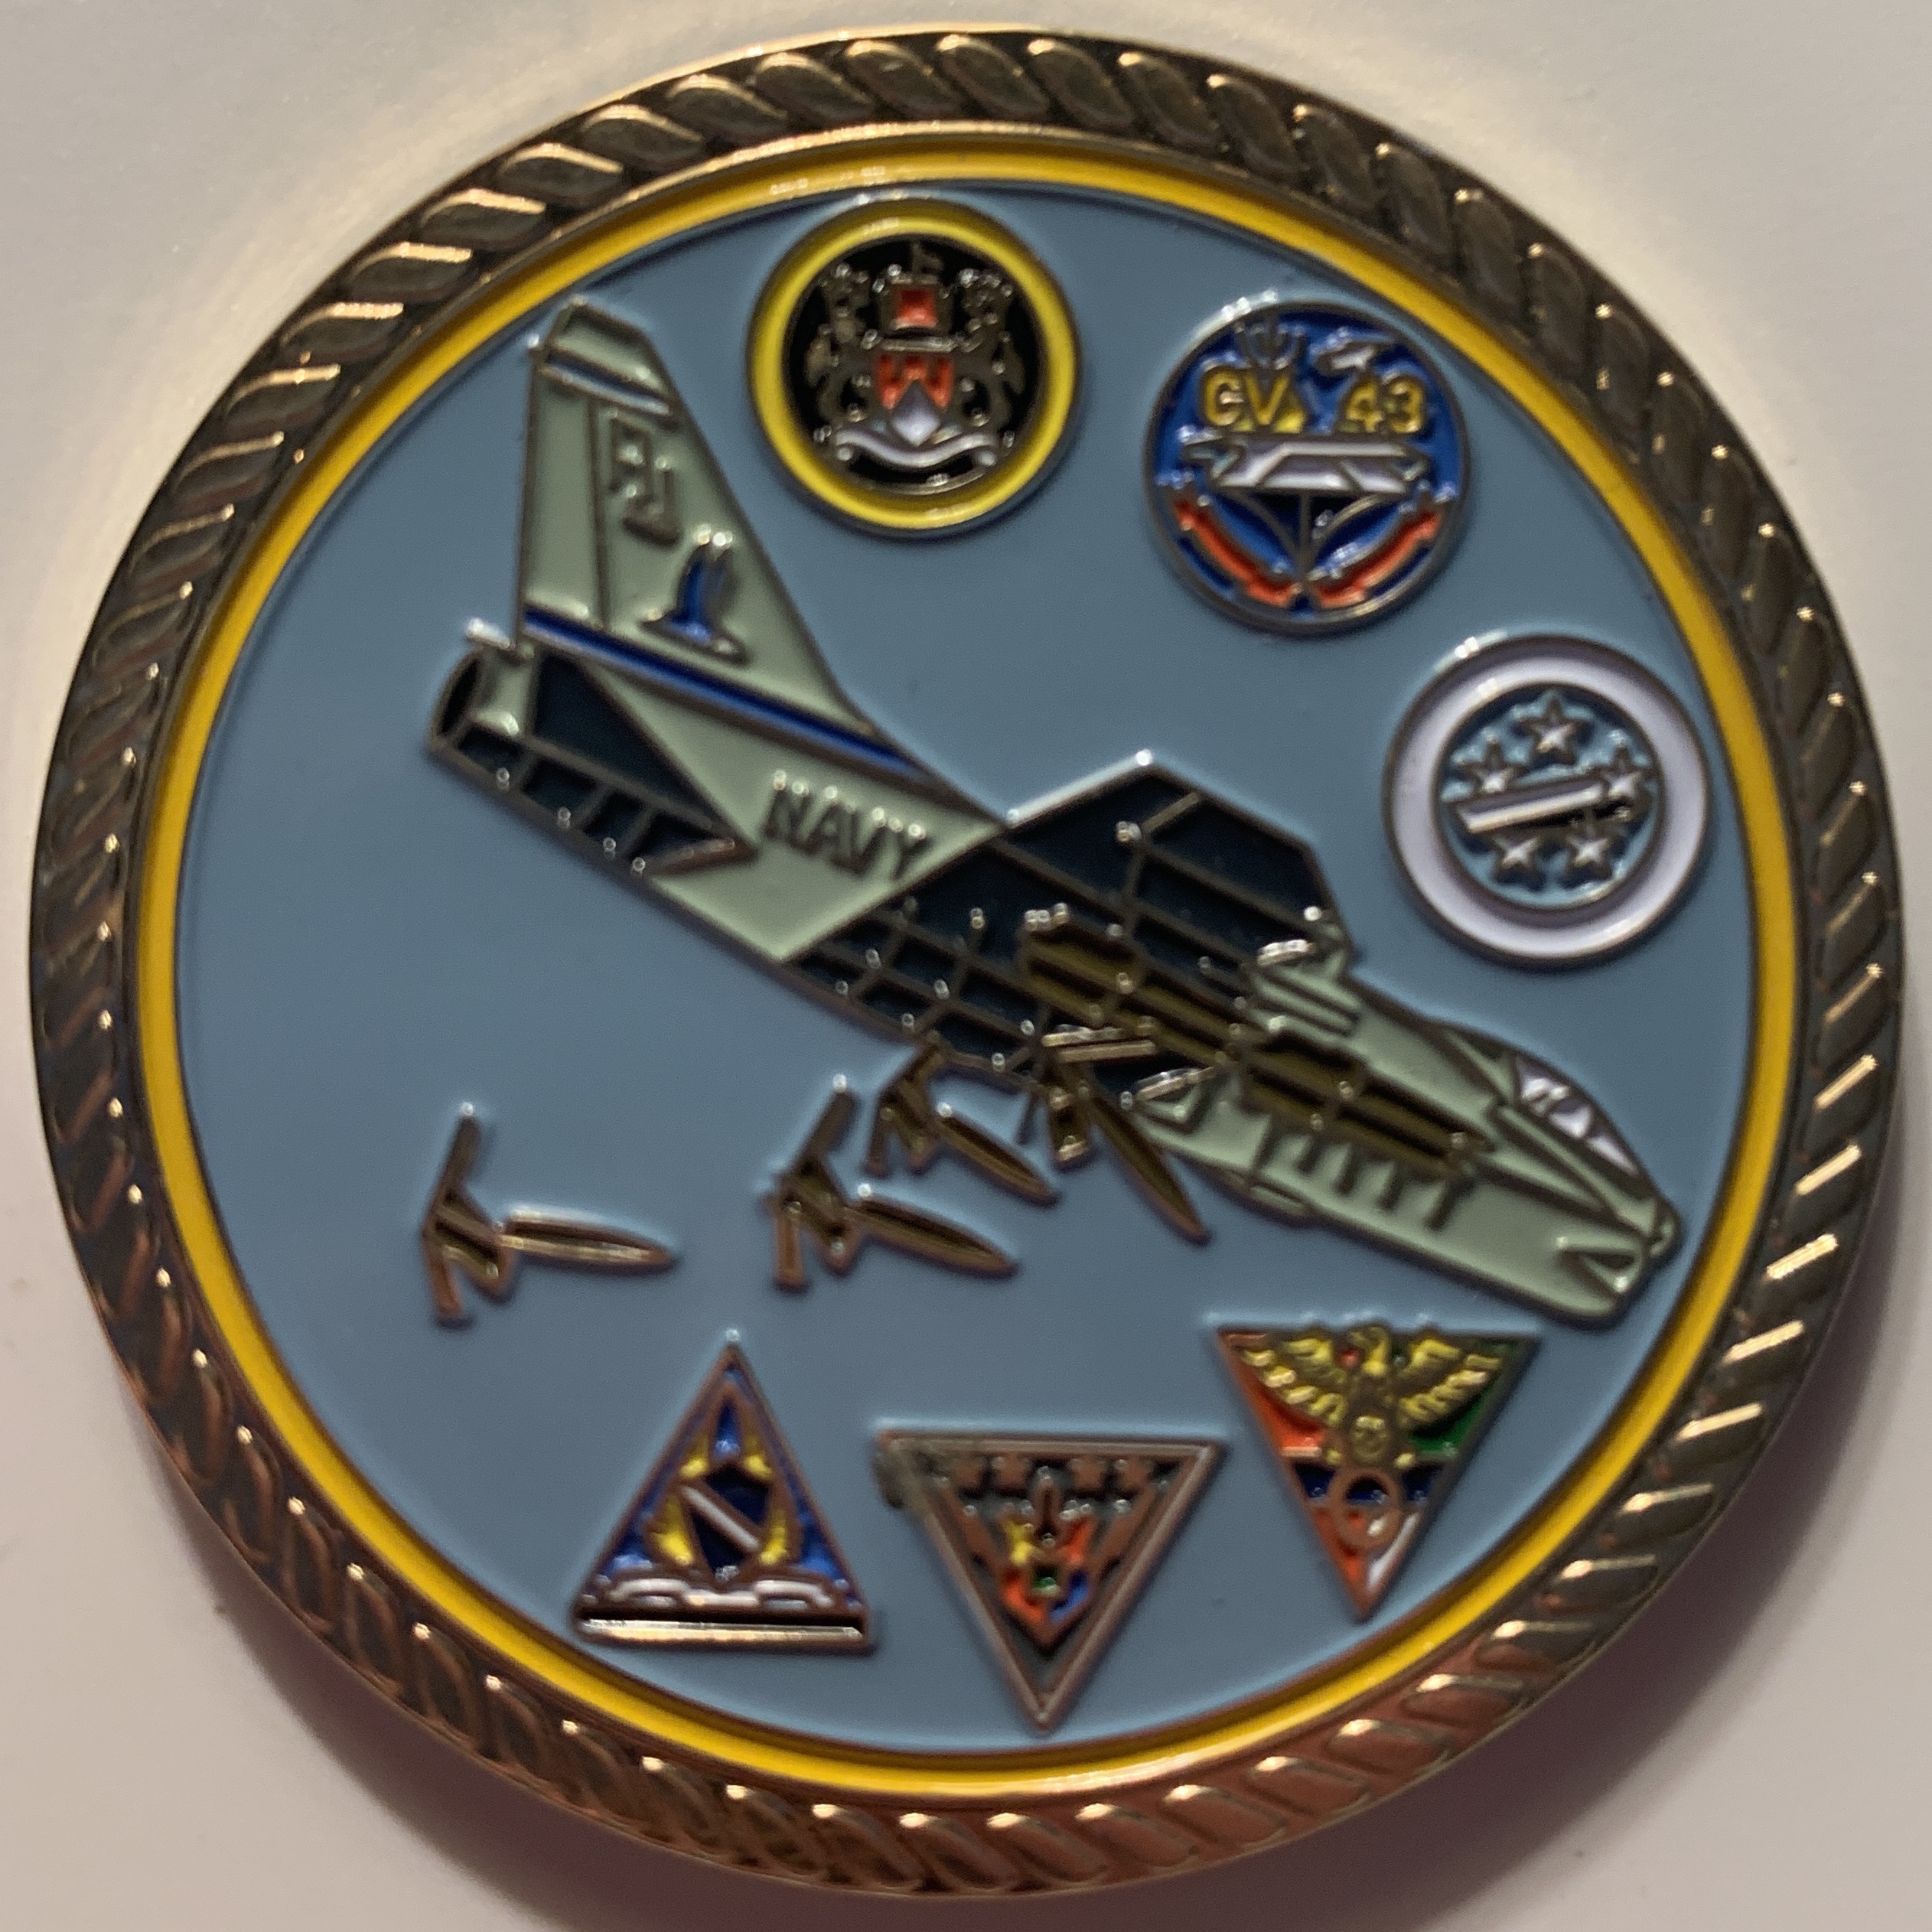 A-7E / VA-82 'MARAUDERS' Coin (Back)